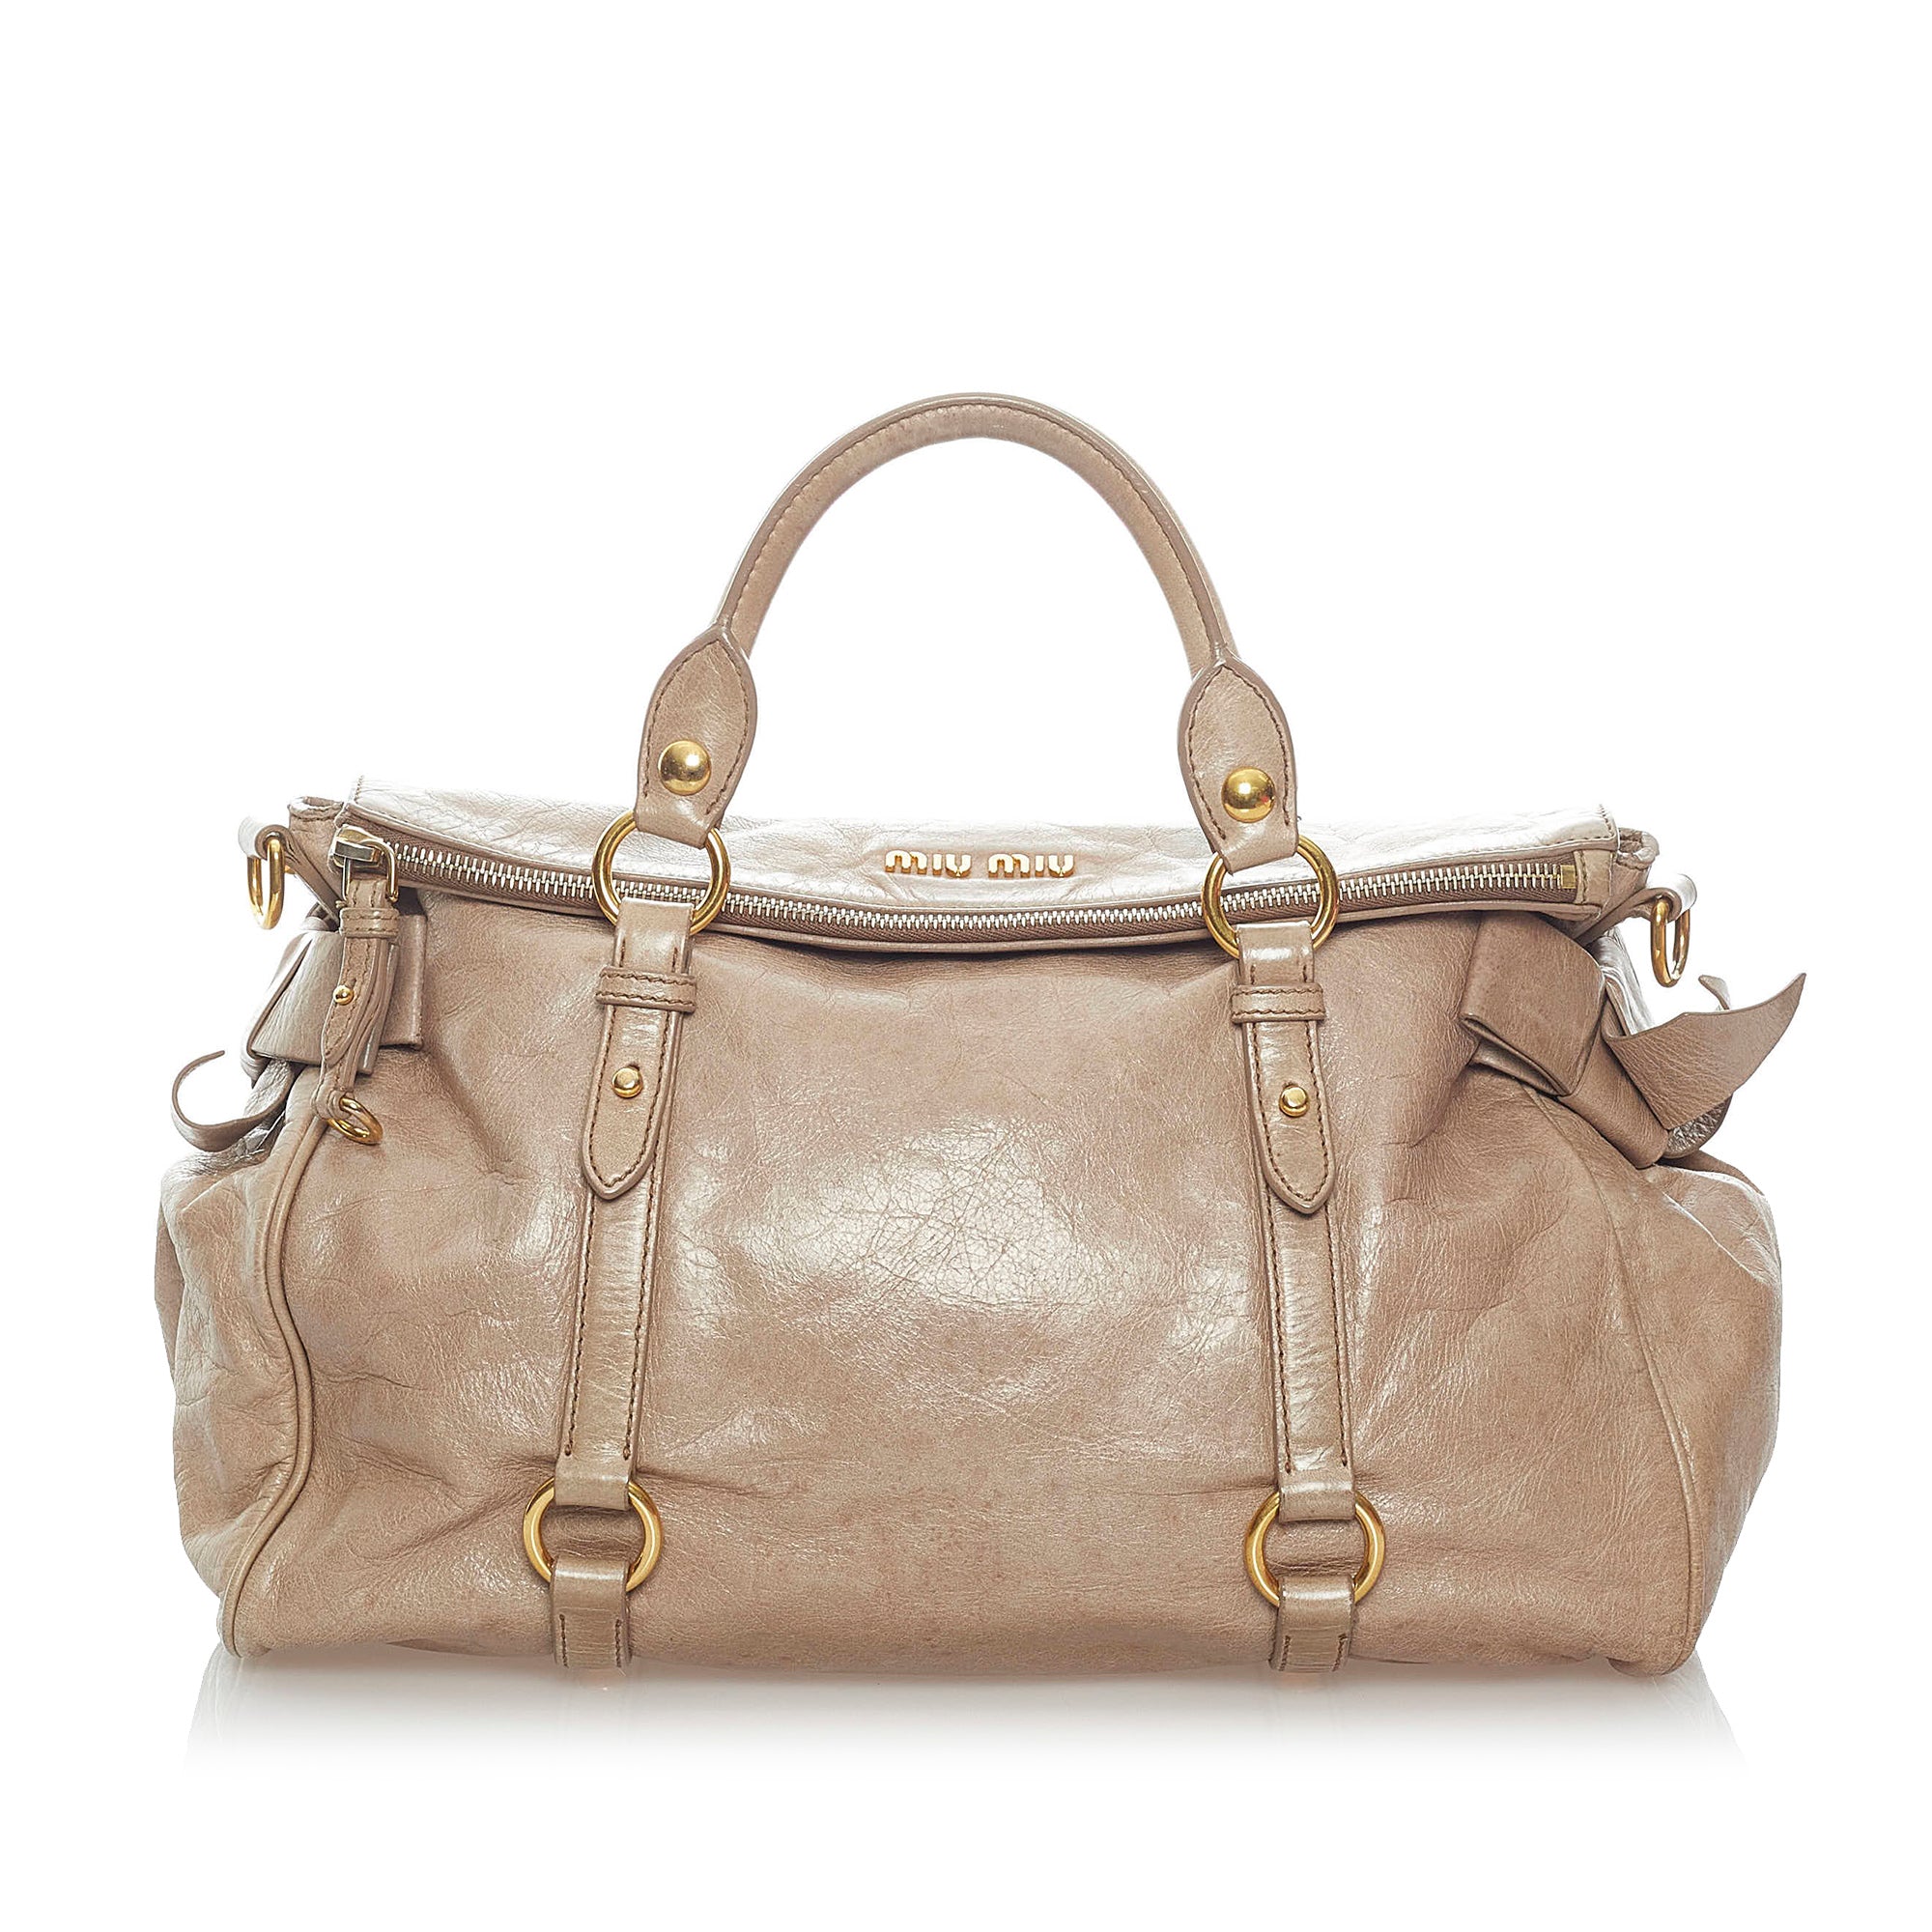 Miu Miu Authenticated Bow Bag Handbag